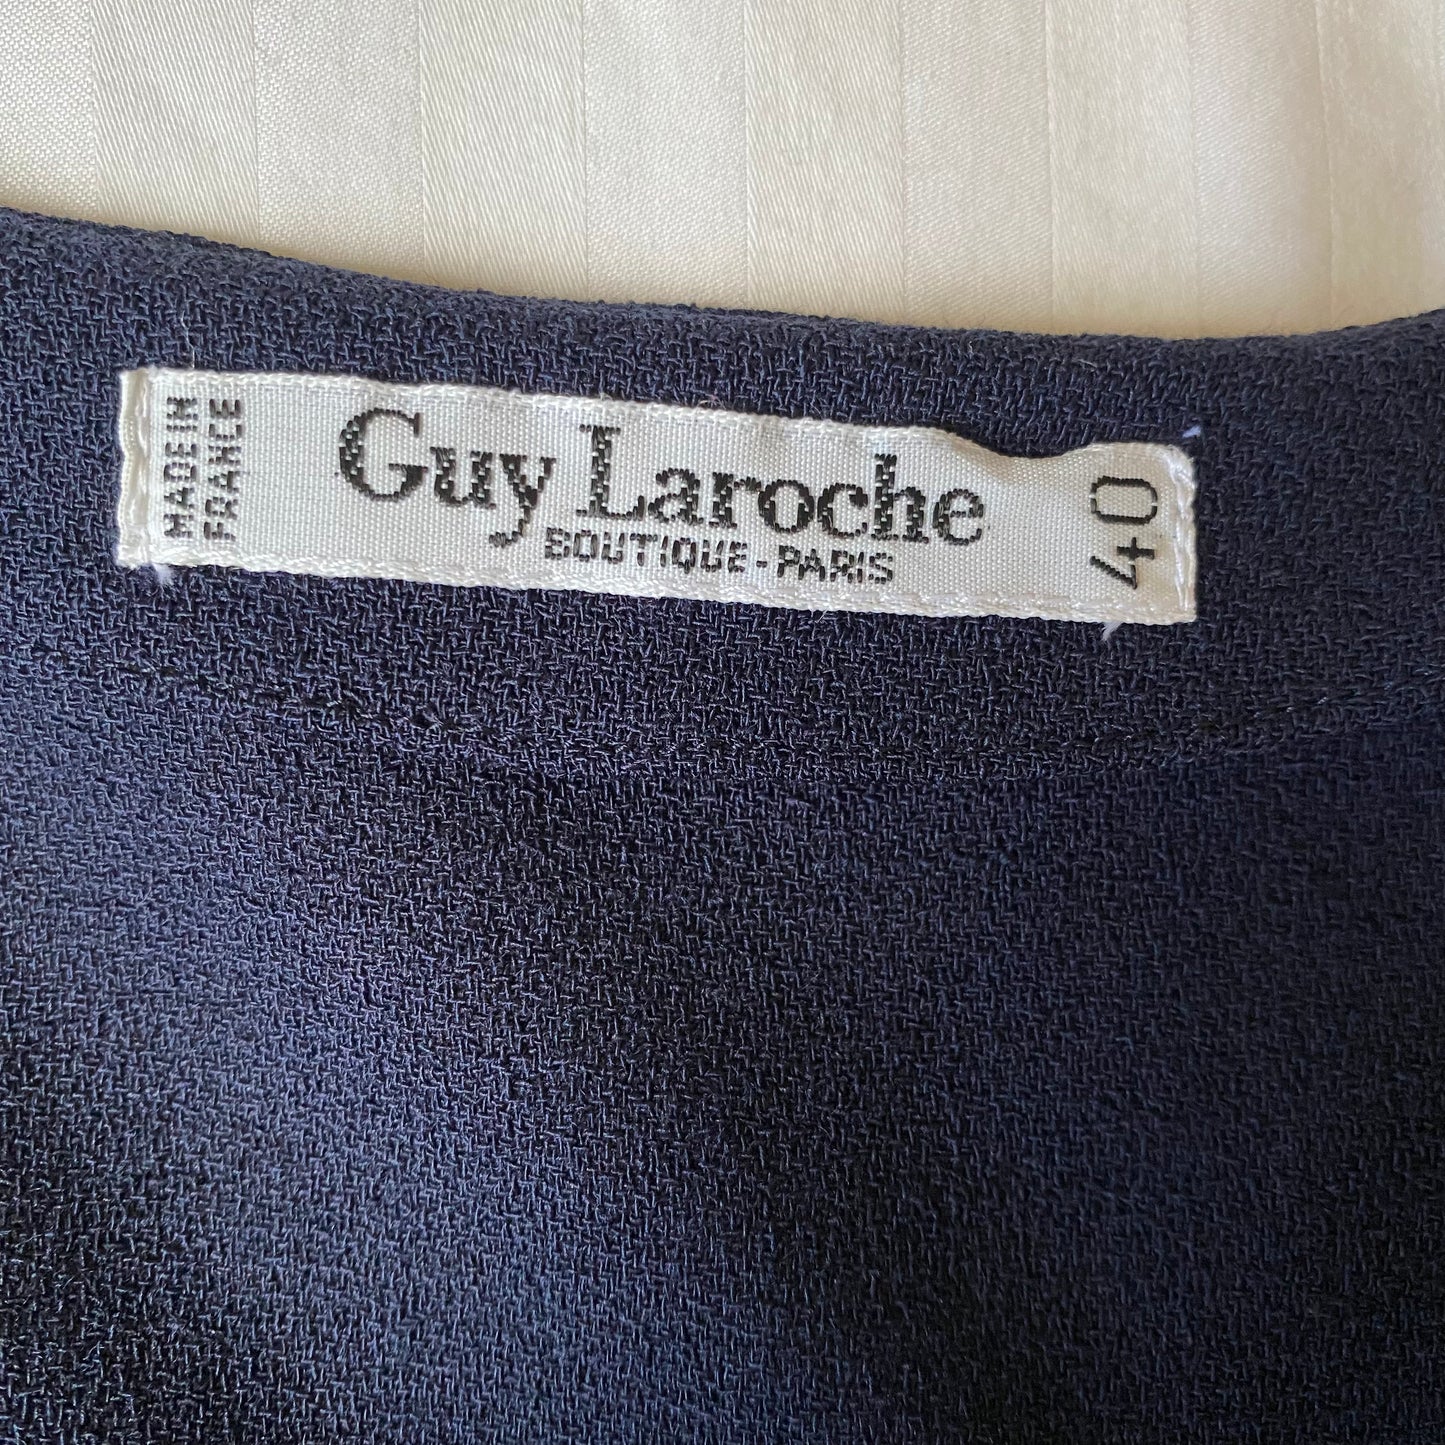 Guy Laroche Boutique marine dress - M - 1990s